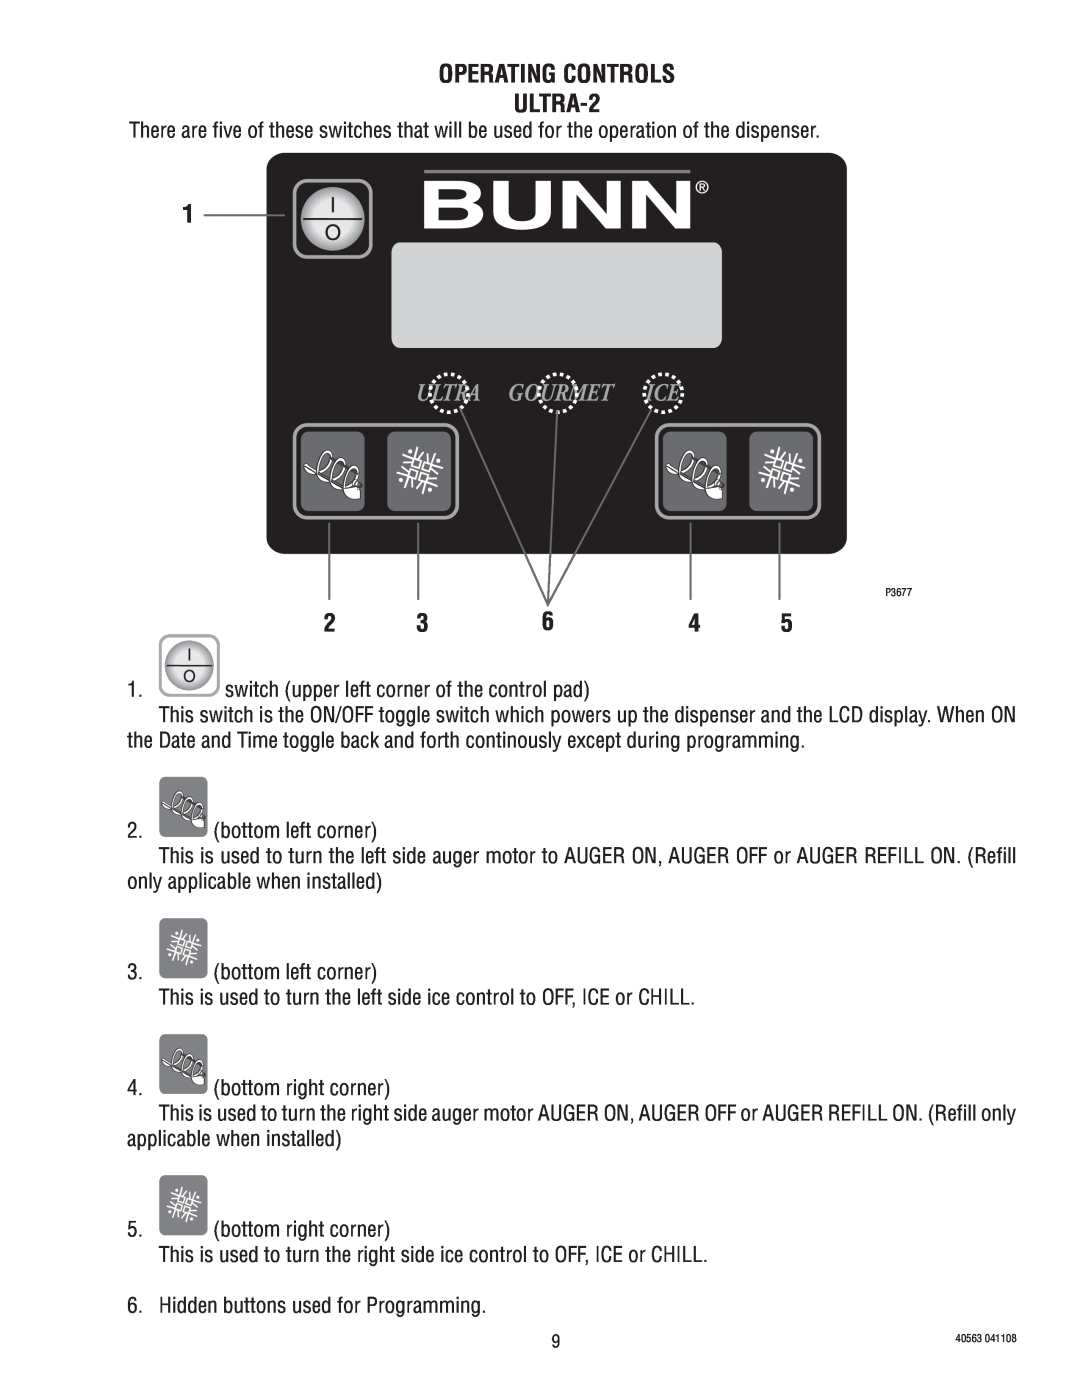 Bunn Ultra 2, ULTRA-1 service manual OPERATING CONTROLS ULTRA-2 